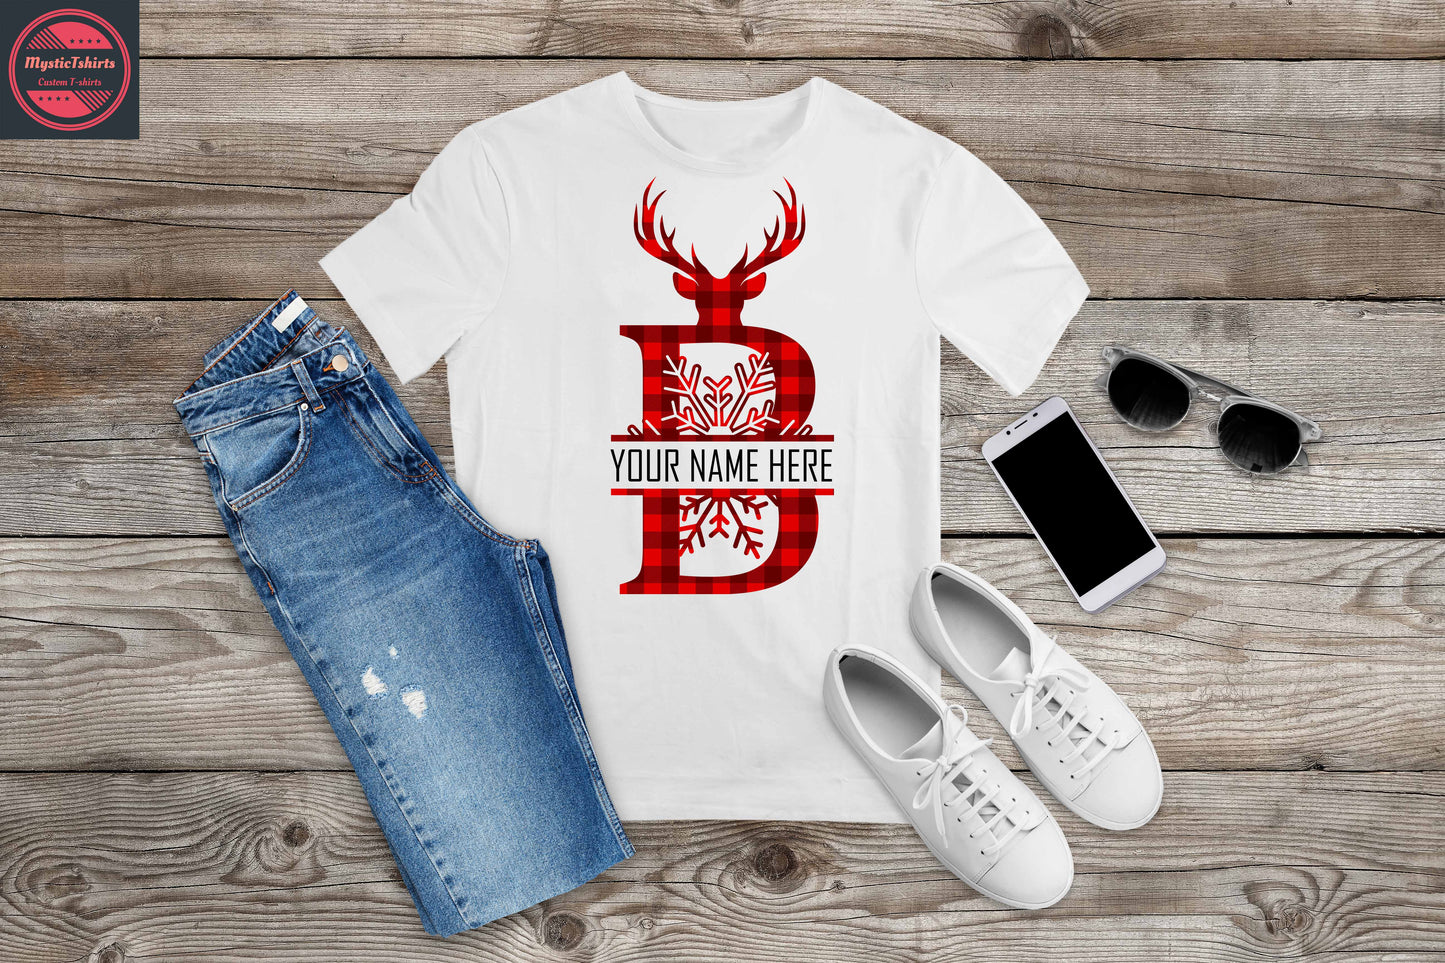 348. MONOGRAMMED RED REINDEER CHRISTMAS B, Custom Made Shirt, Personalized T-Shirt, Custom Text, Make Your Own Shirt, Custom Tee